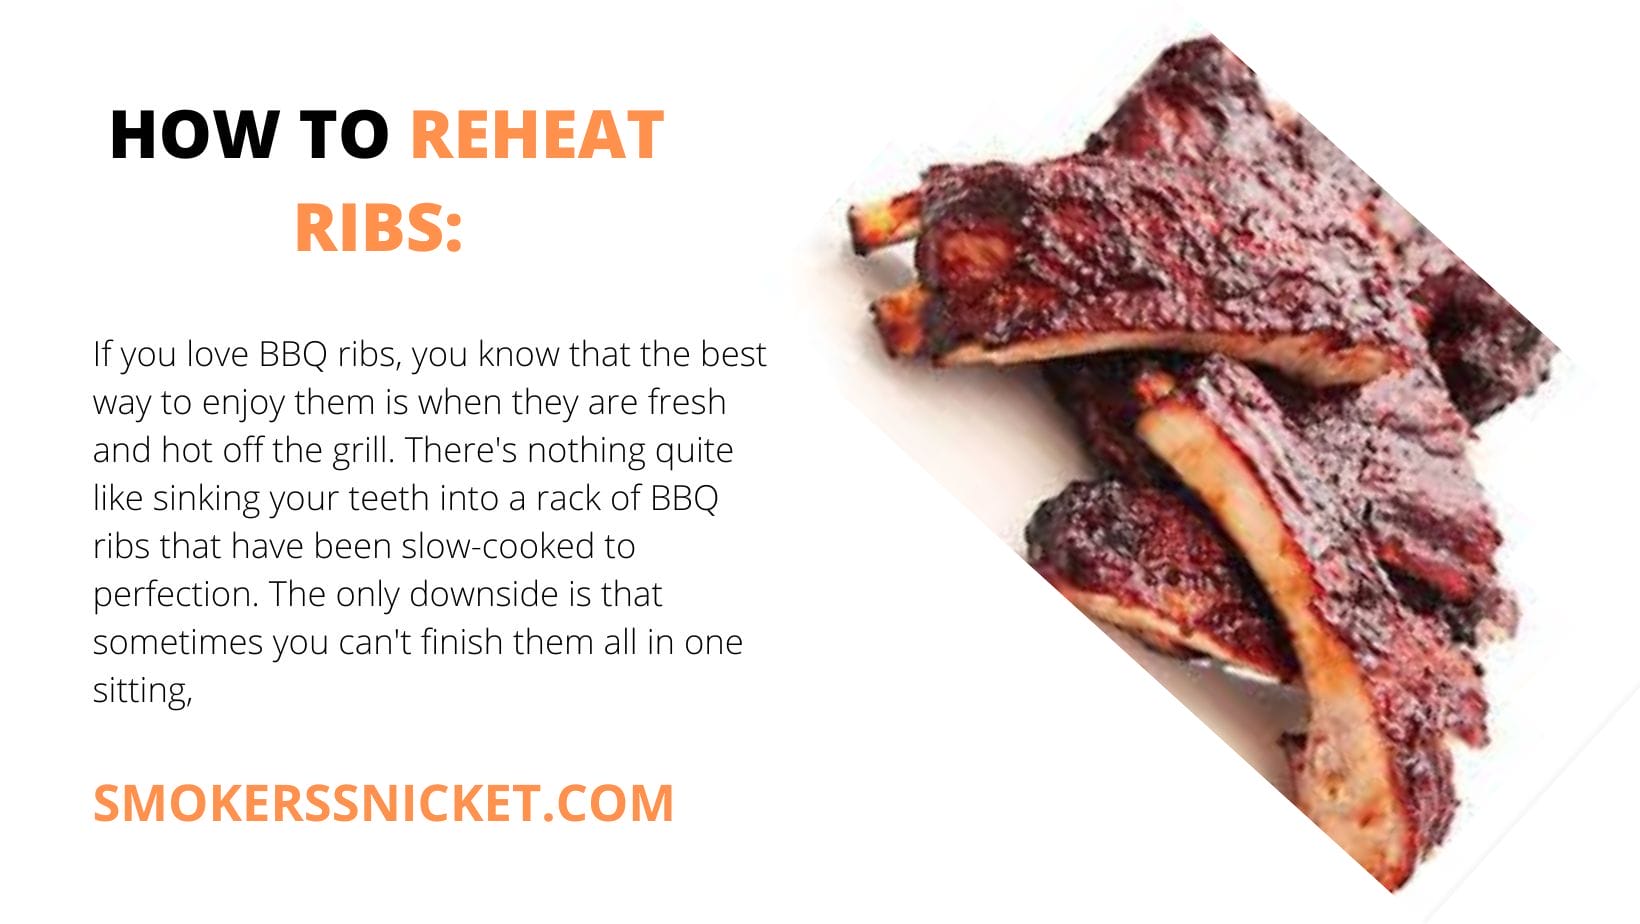 How to reheat ribs